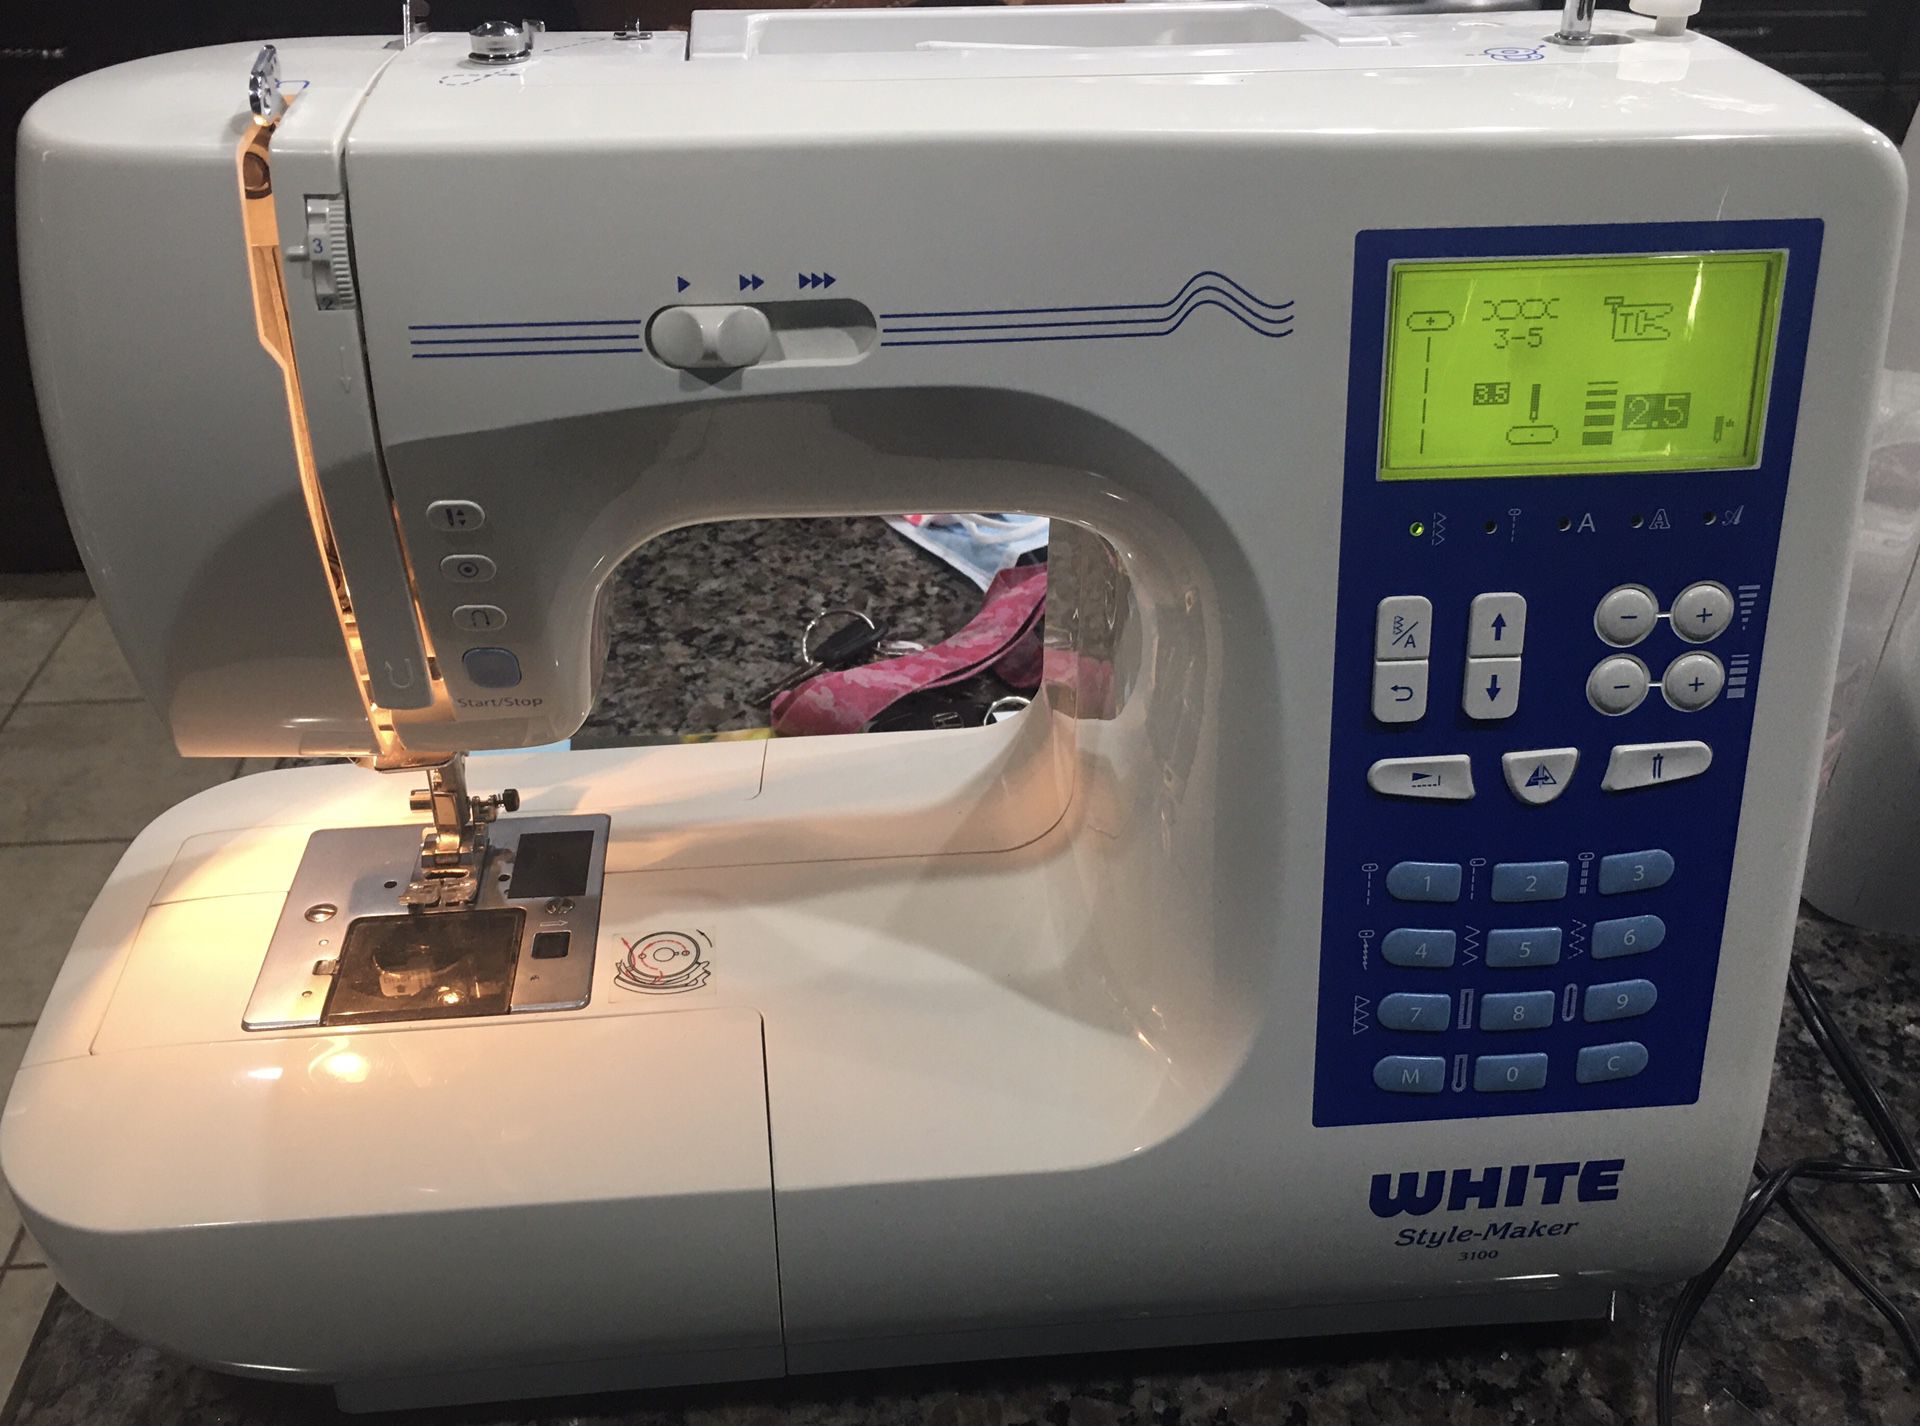 White style-maker 3100 sewing machine